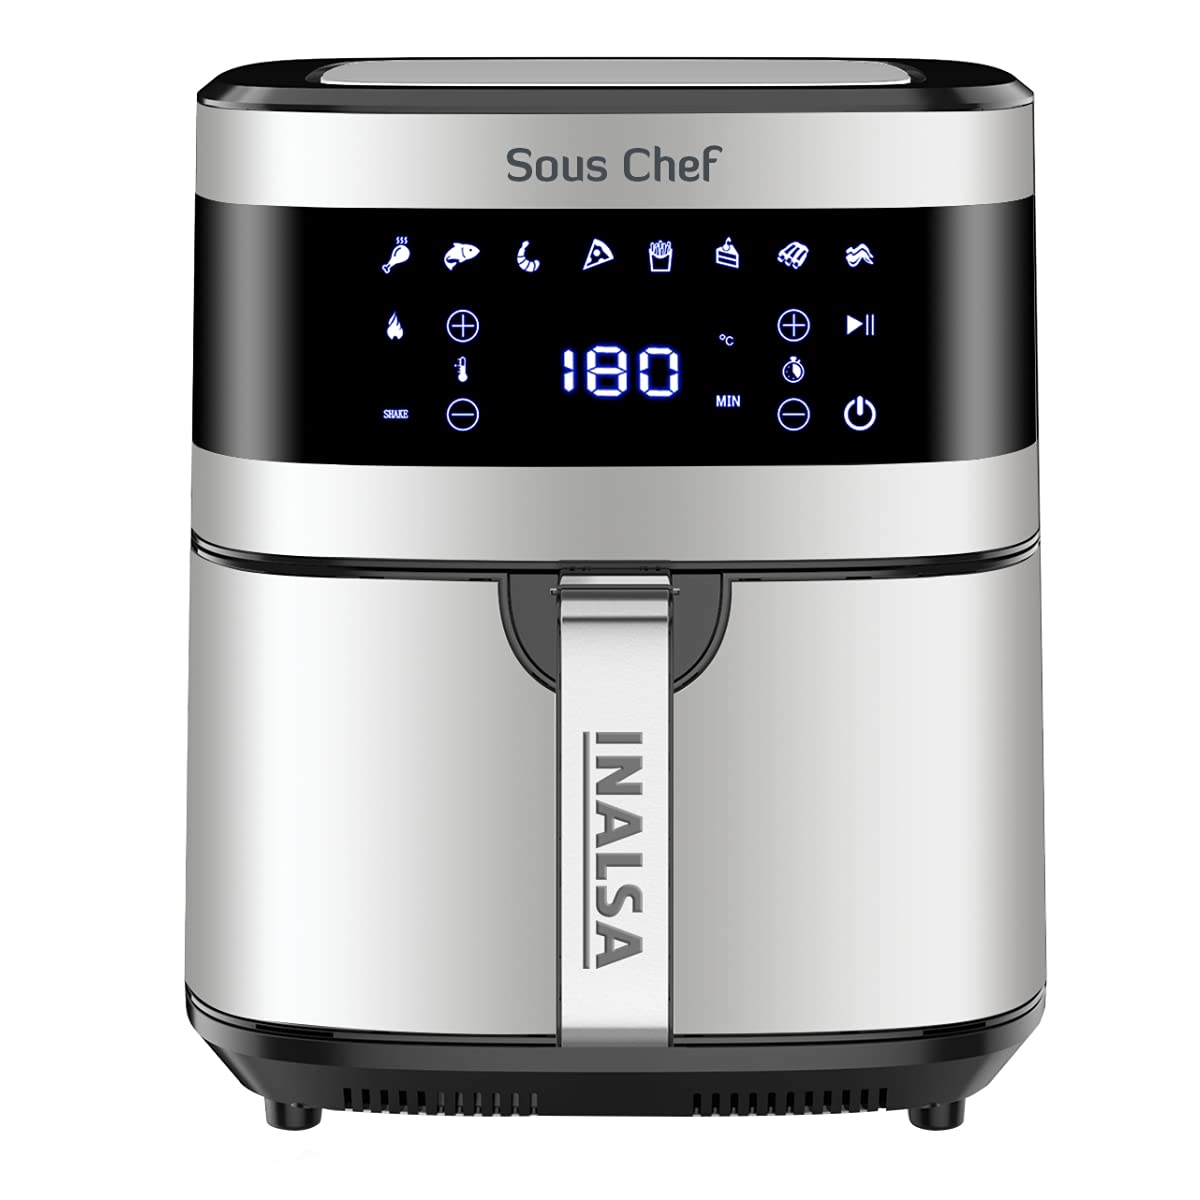 Inalsa Air Frying machine under price 10,000